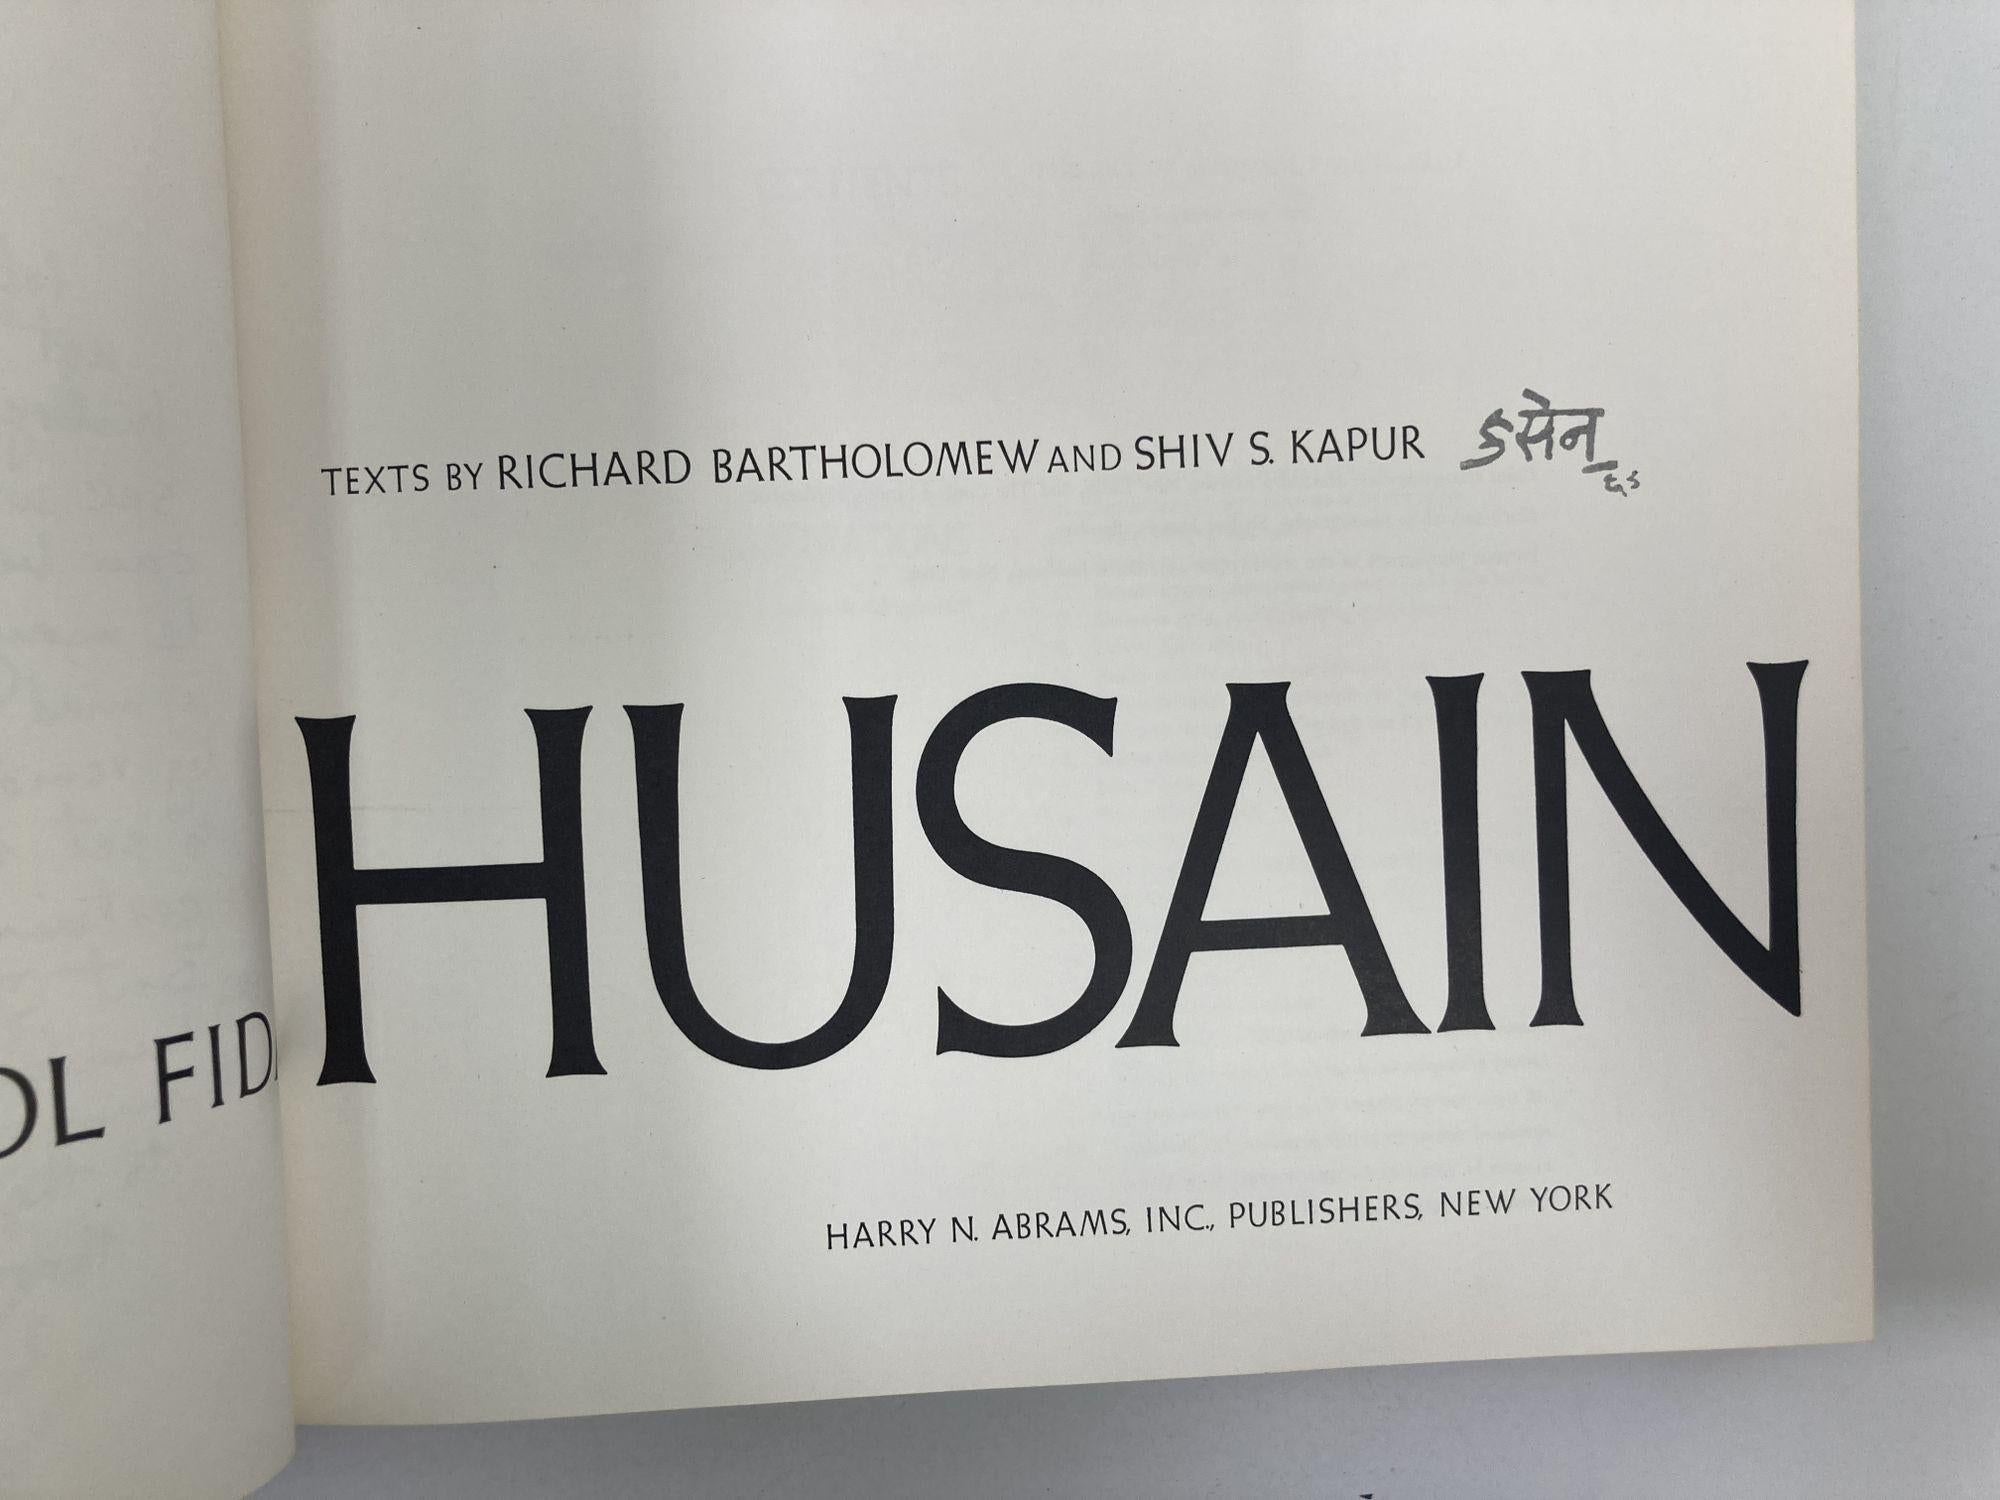 Husain by Maqbul Fida Husain, Richard Bartholomew, Shiv S. Kapur, H. N. Abrams For Sale 2